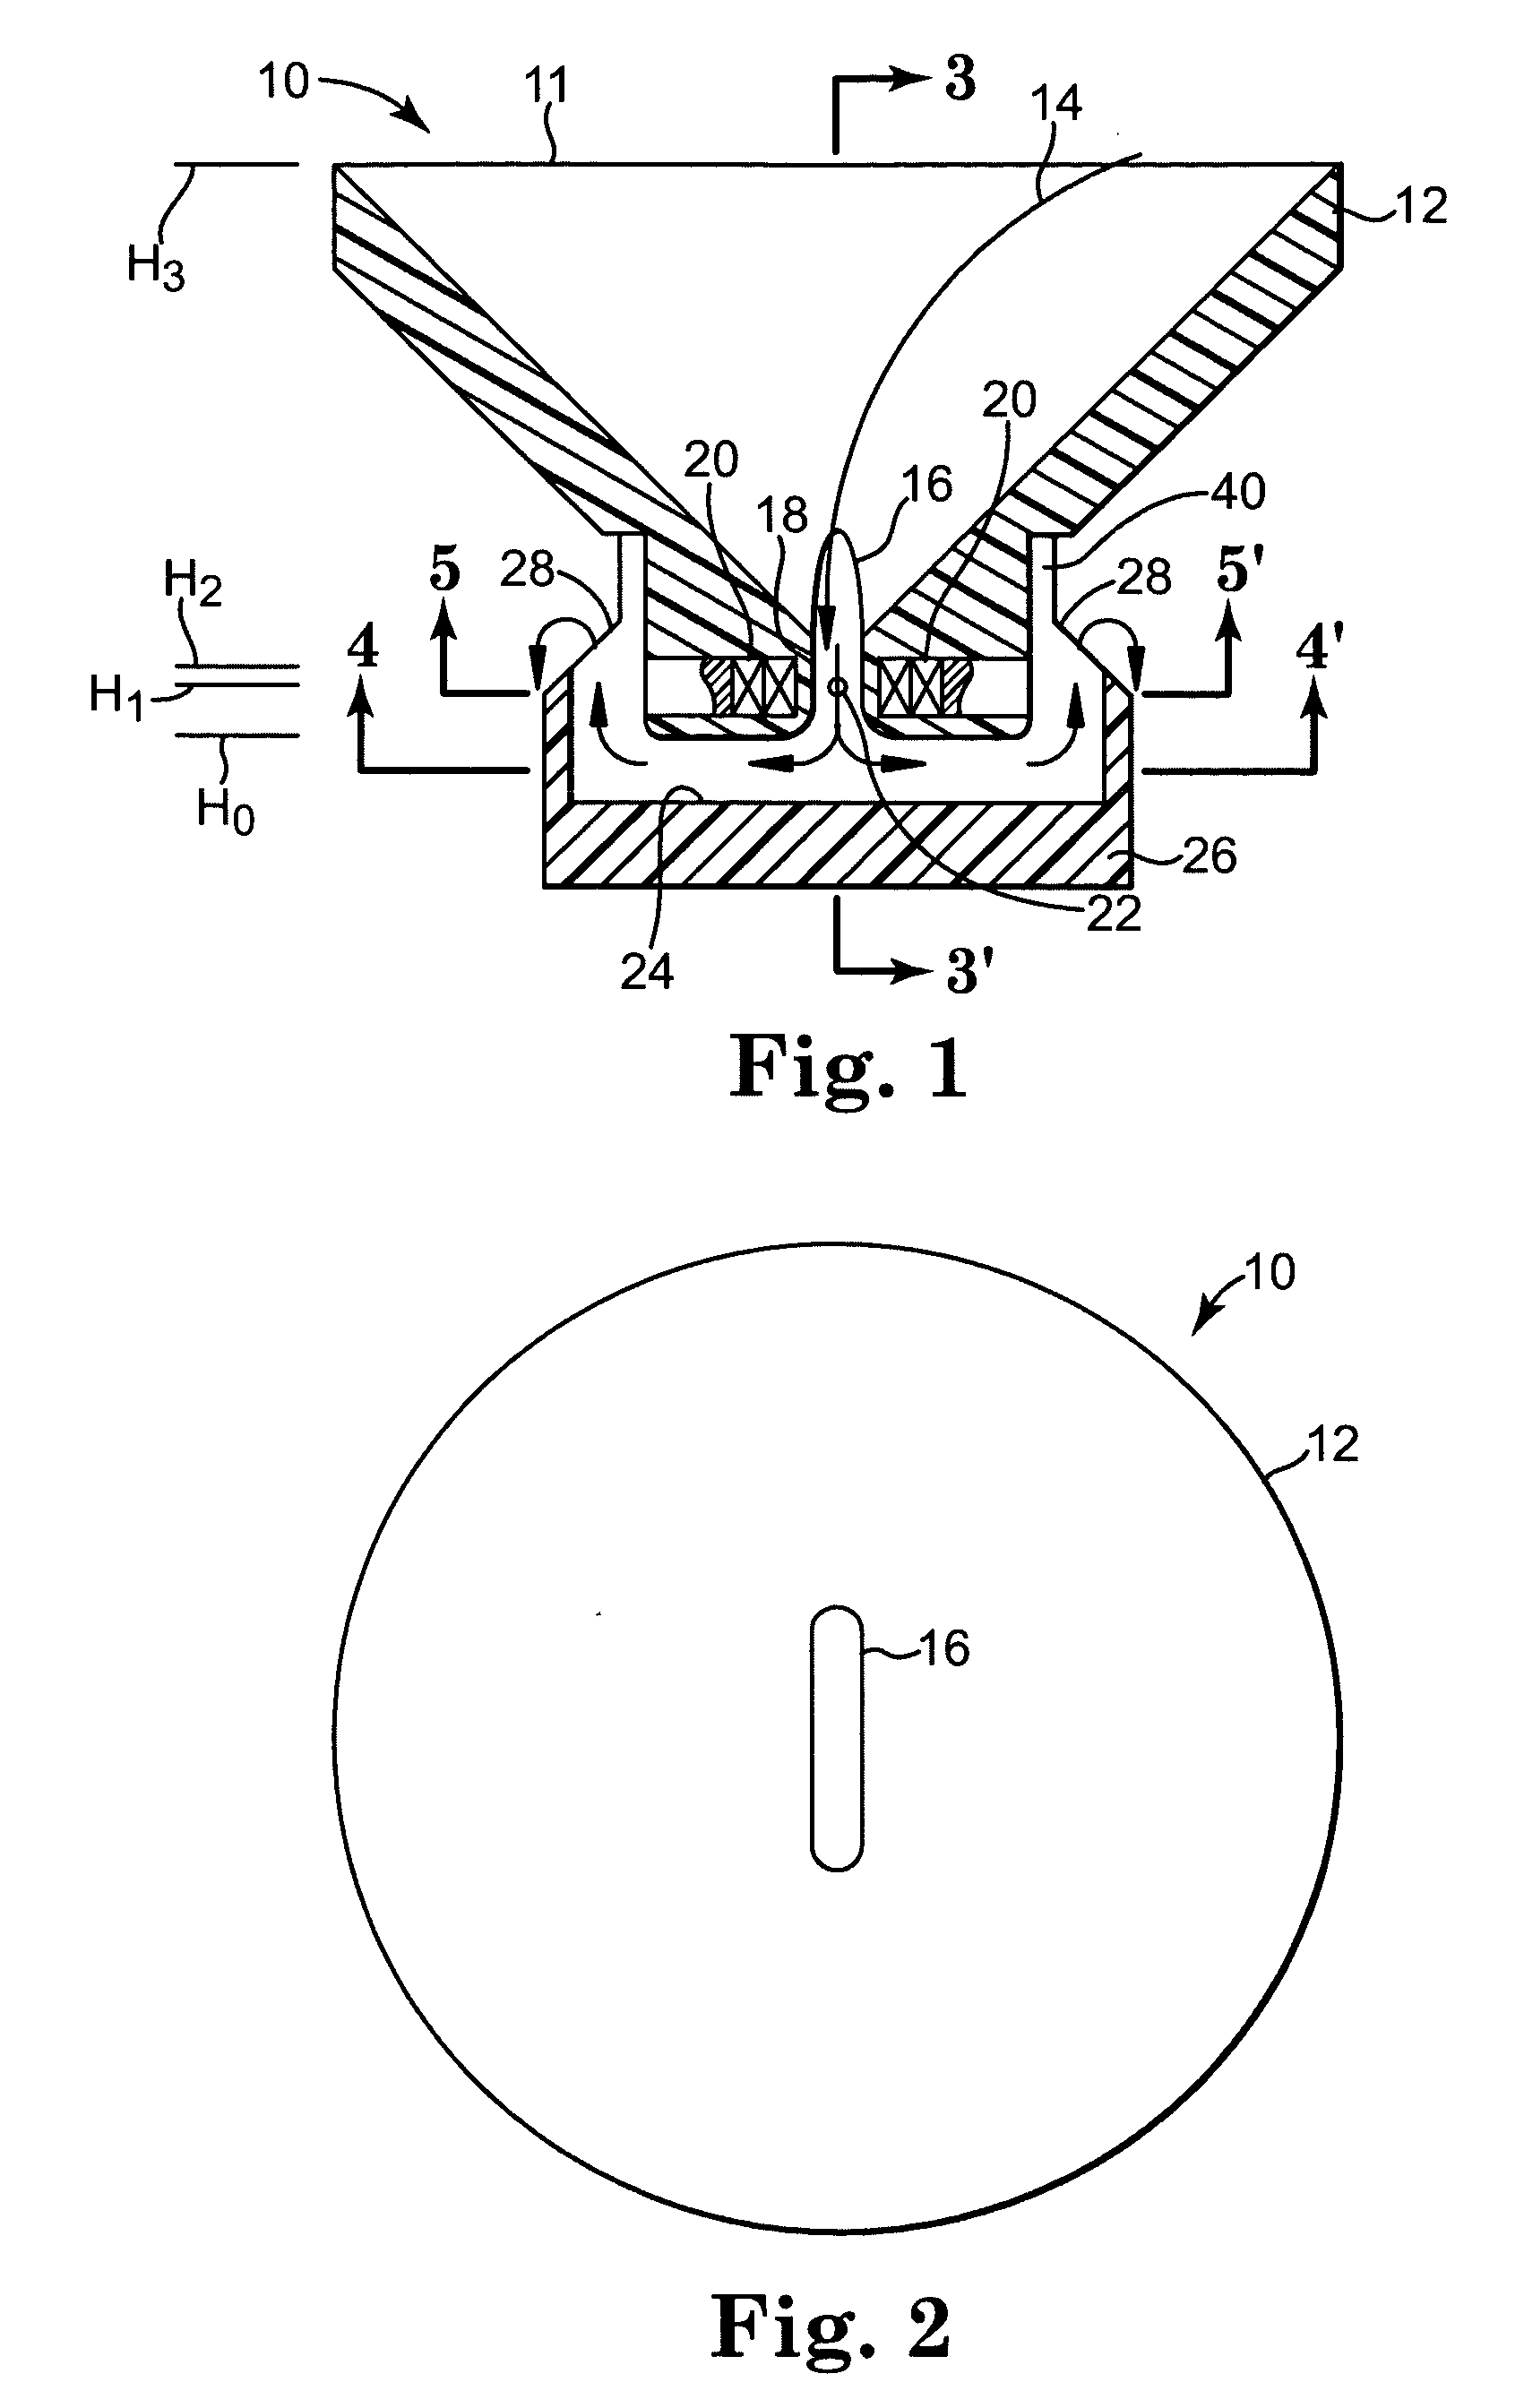 Open circuit gravity-assisted uroflowmeter